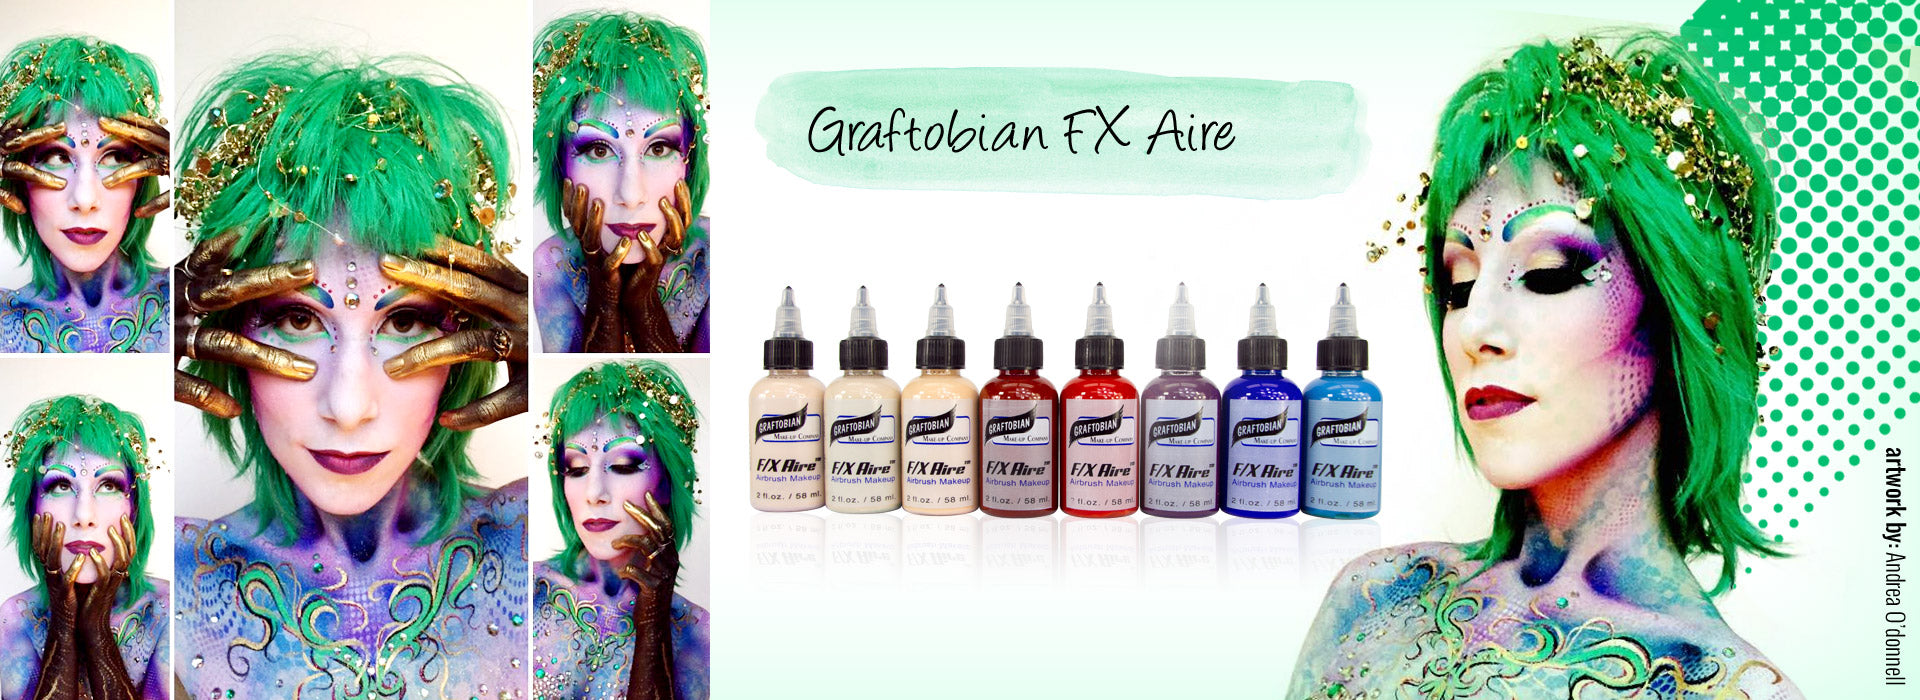 Graftobian FX Aire Hybrid Airbrush Makeup